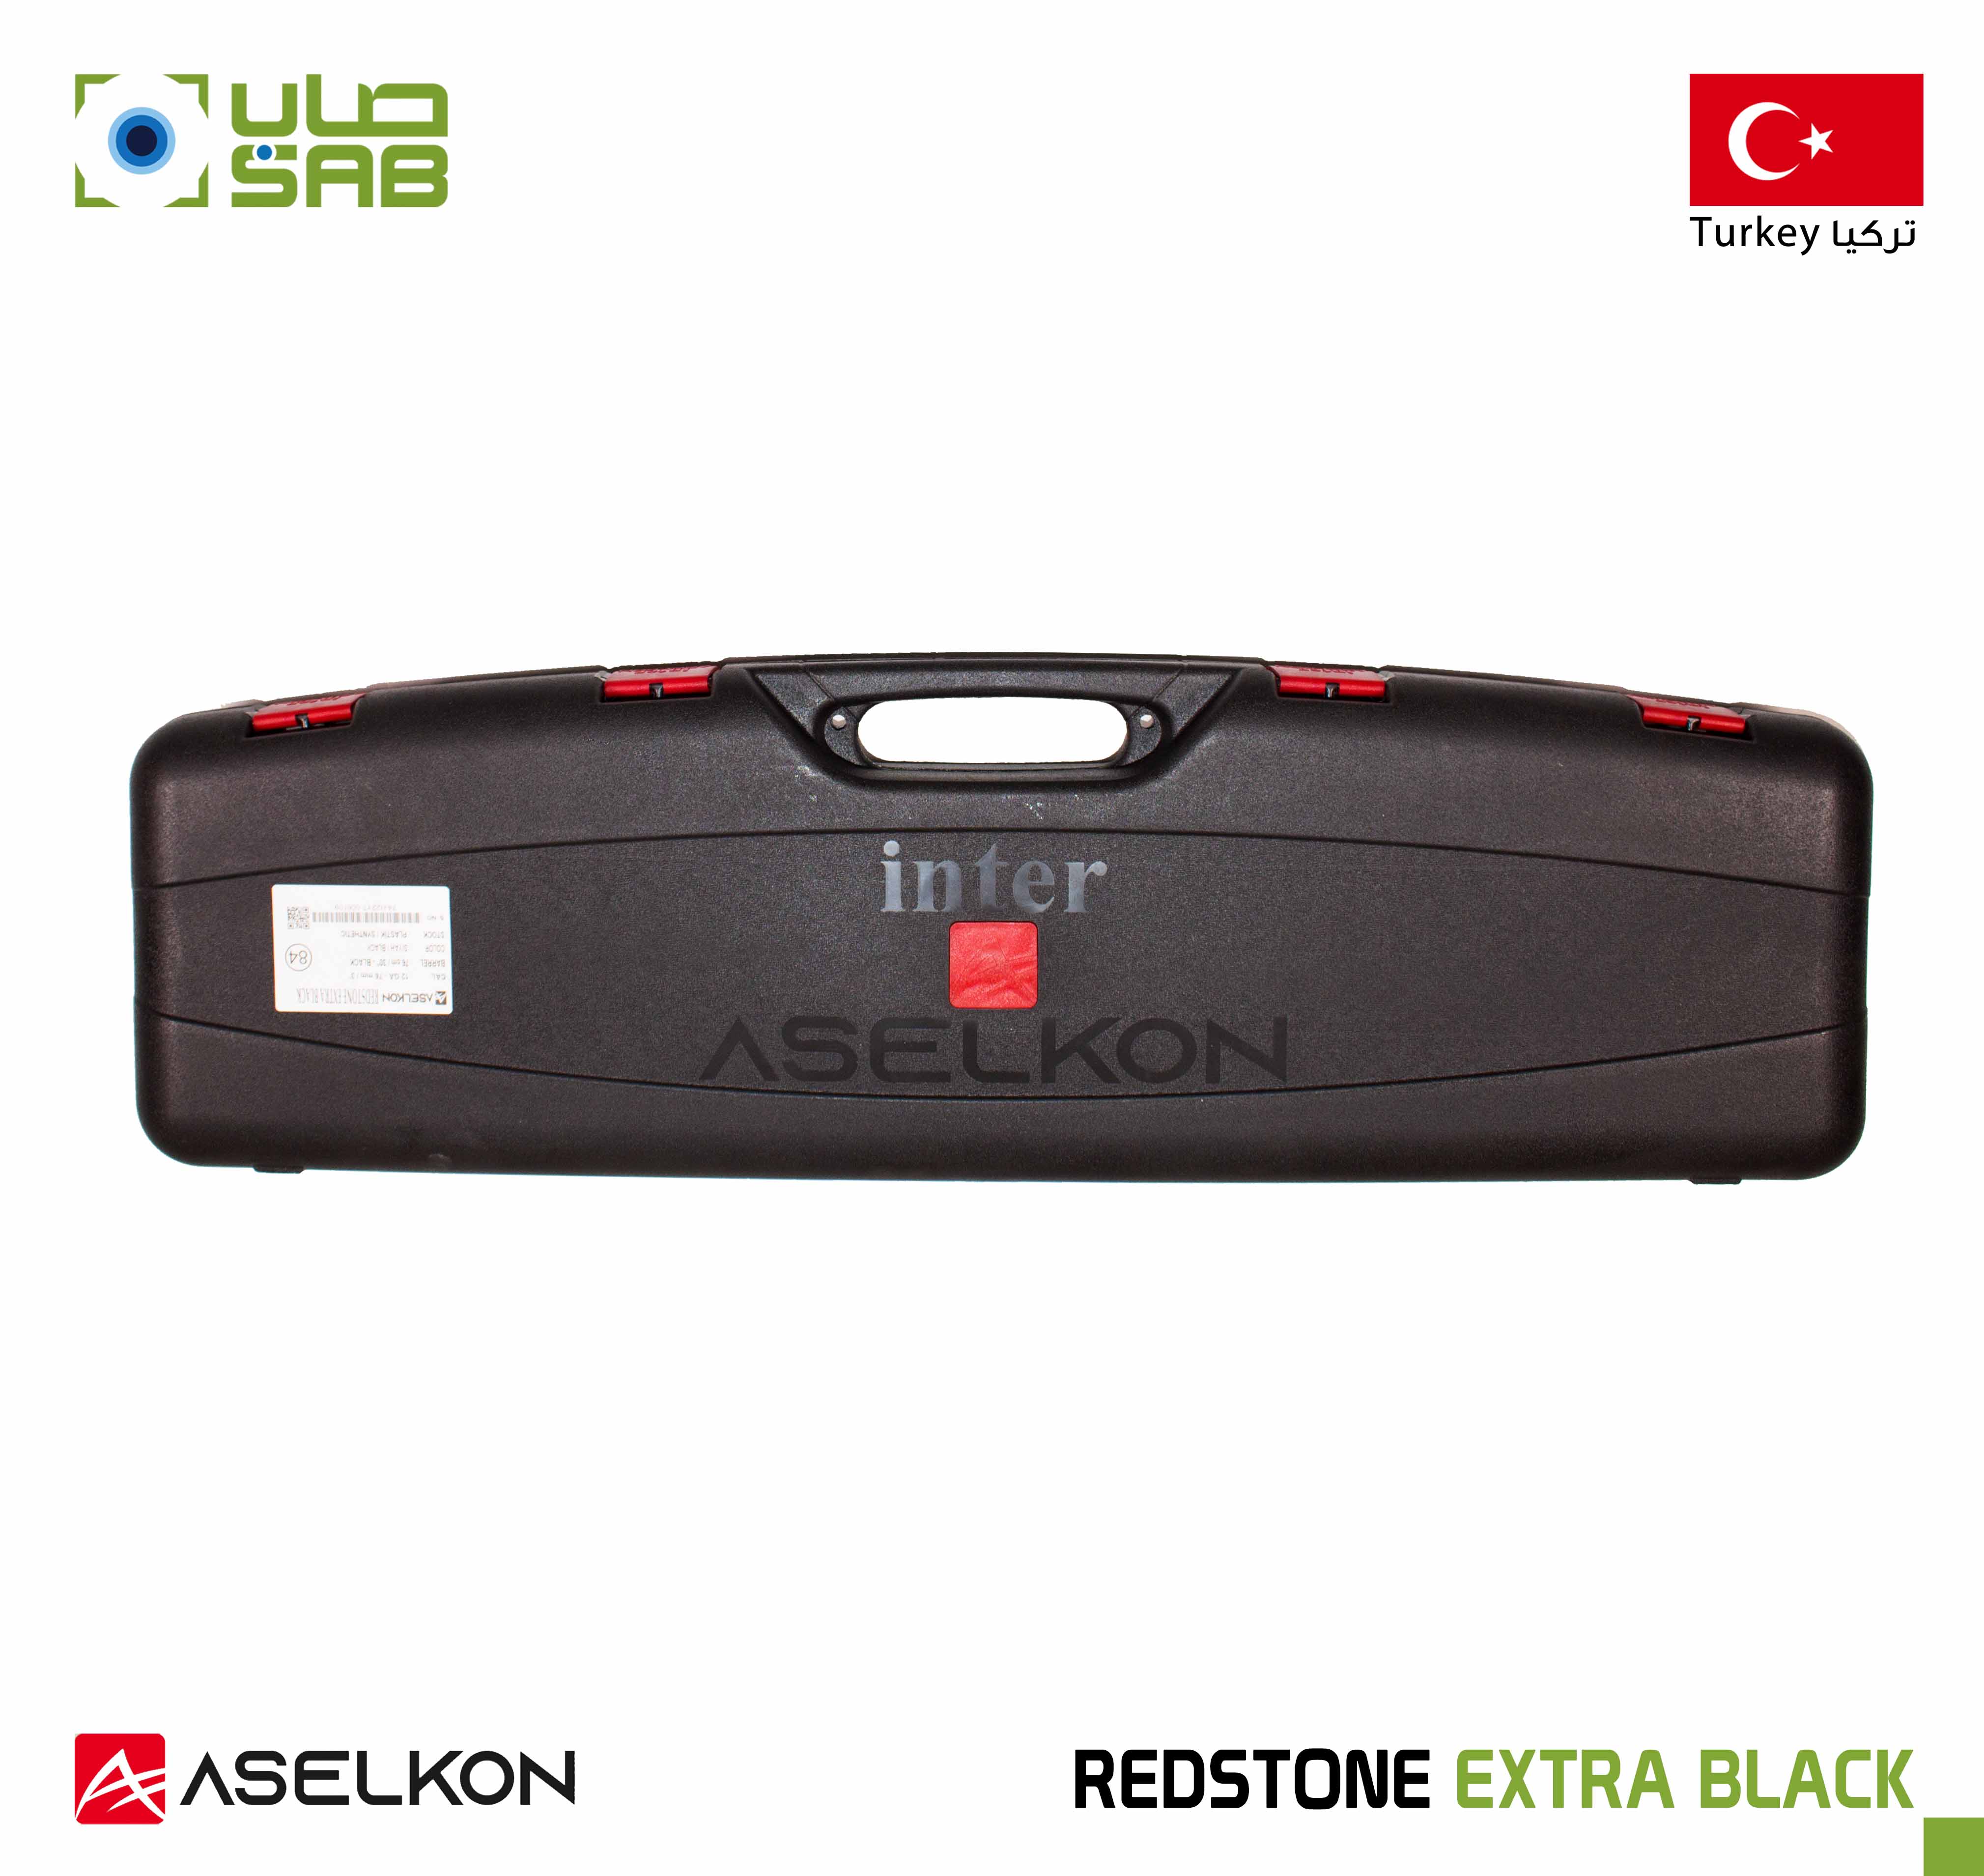 12 G - Aselkon - REDSTONE EXTRA BLACK 30" POLYMER